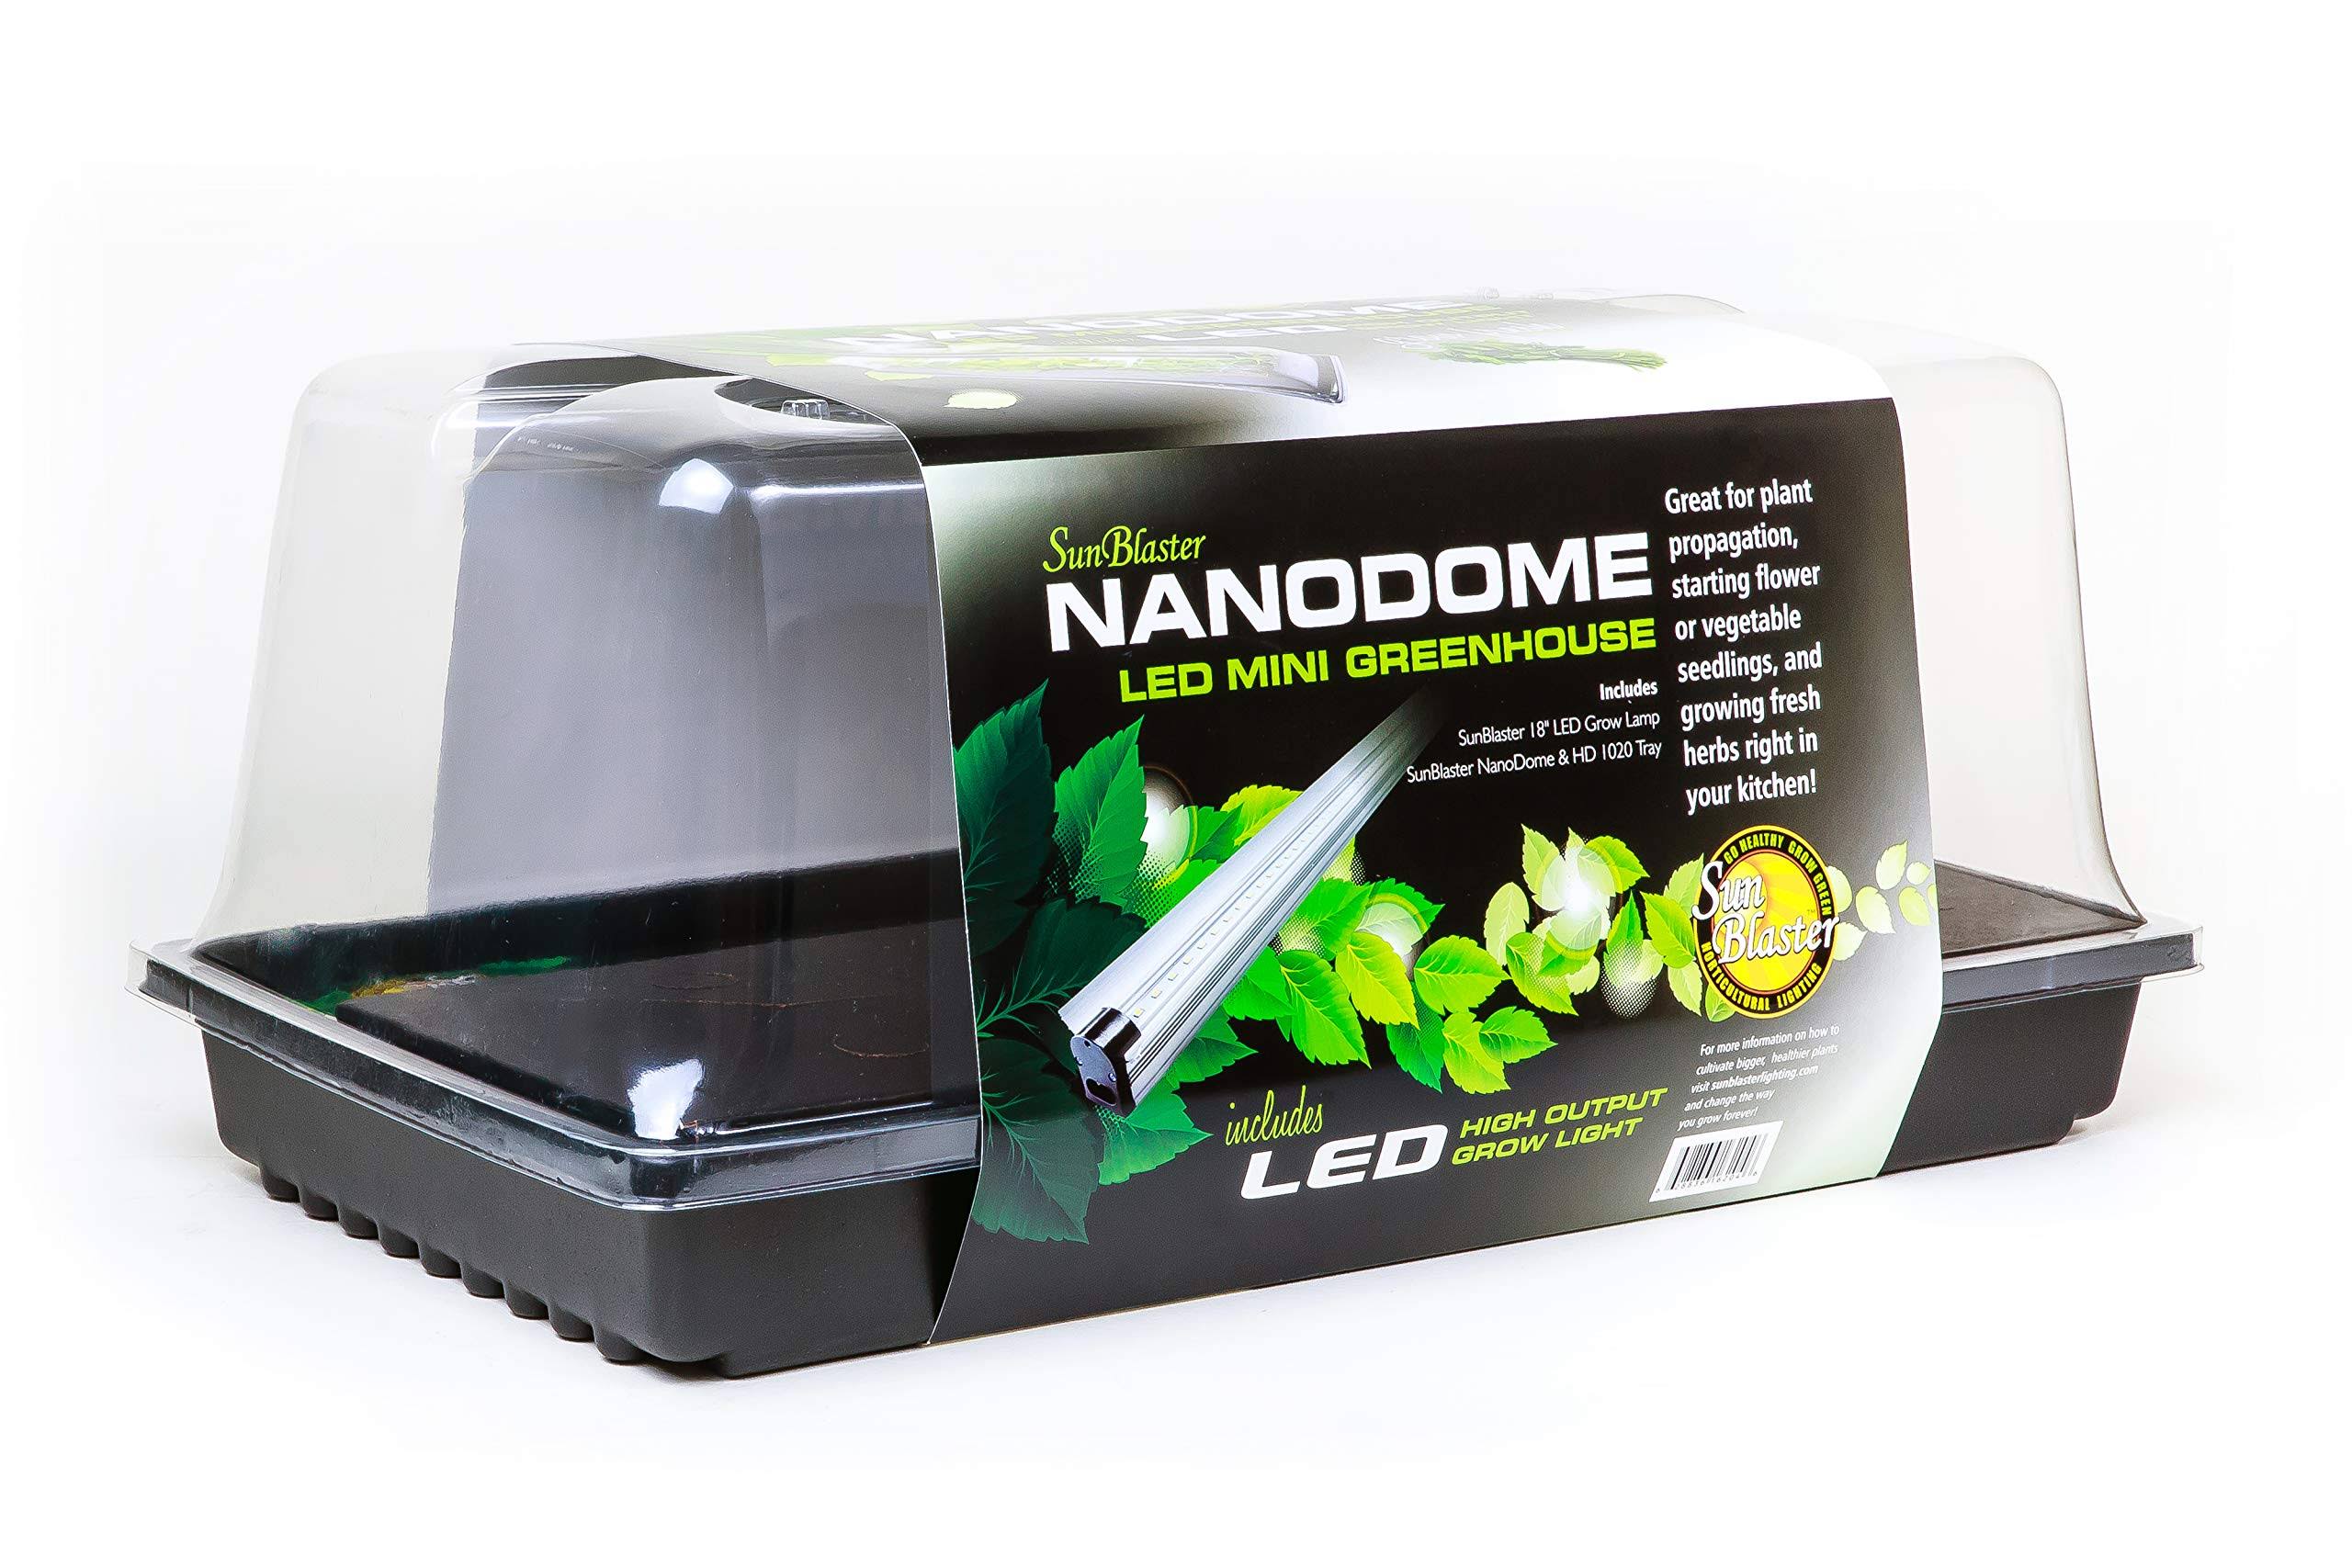 Sunblaster LED Greenhouse Growing Kit